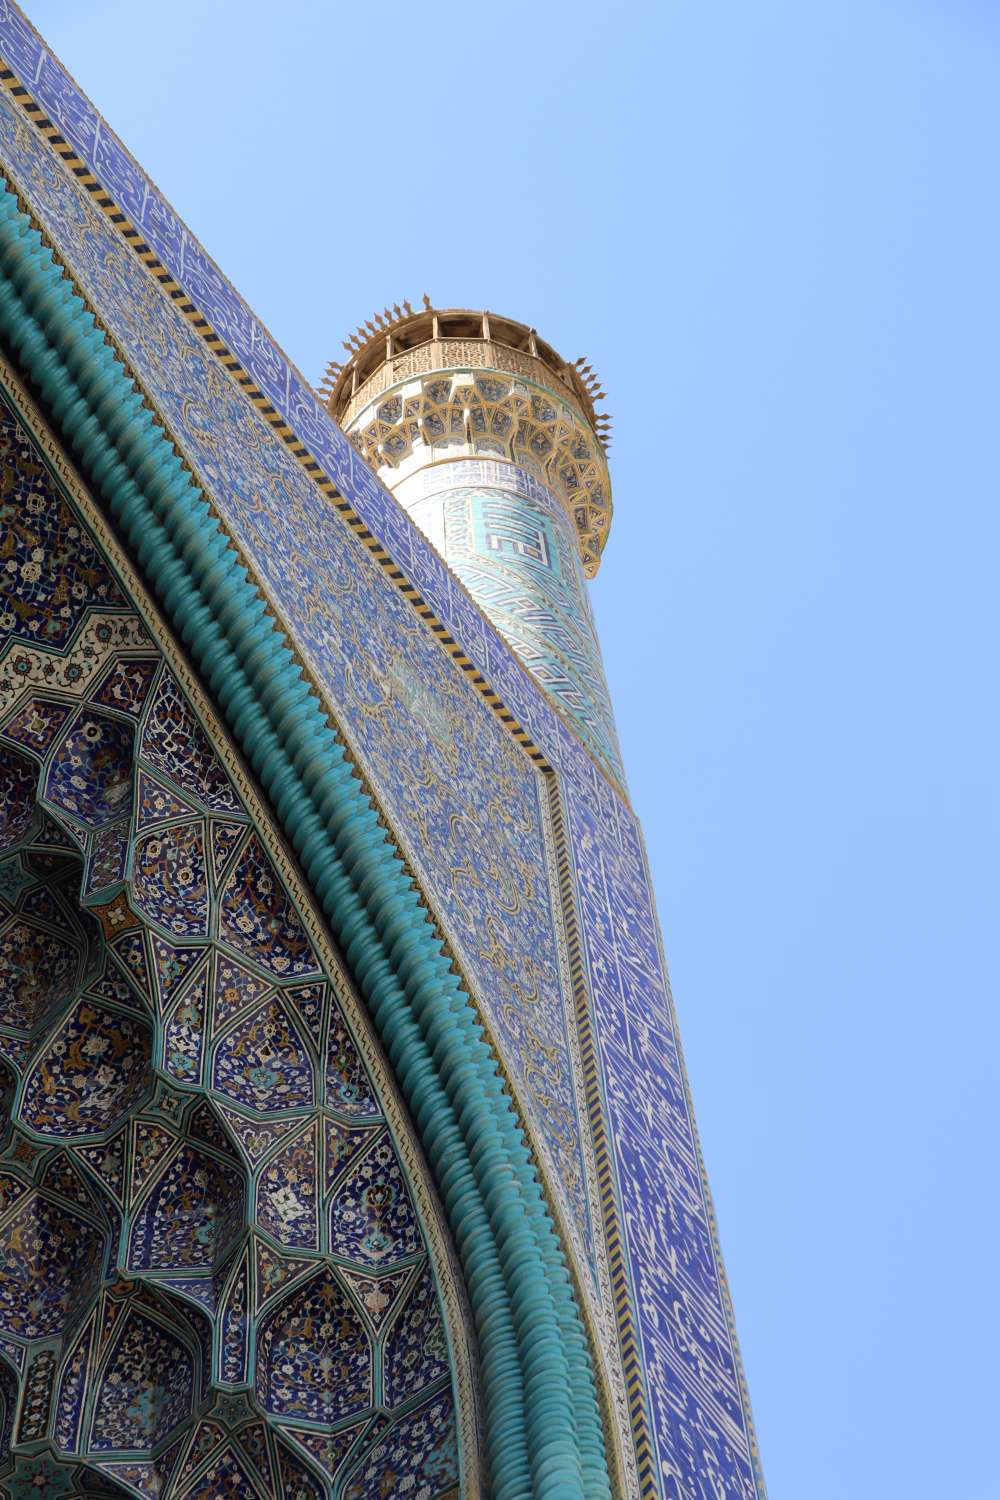 Entrance portal: looking up toward minaret.